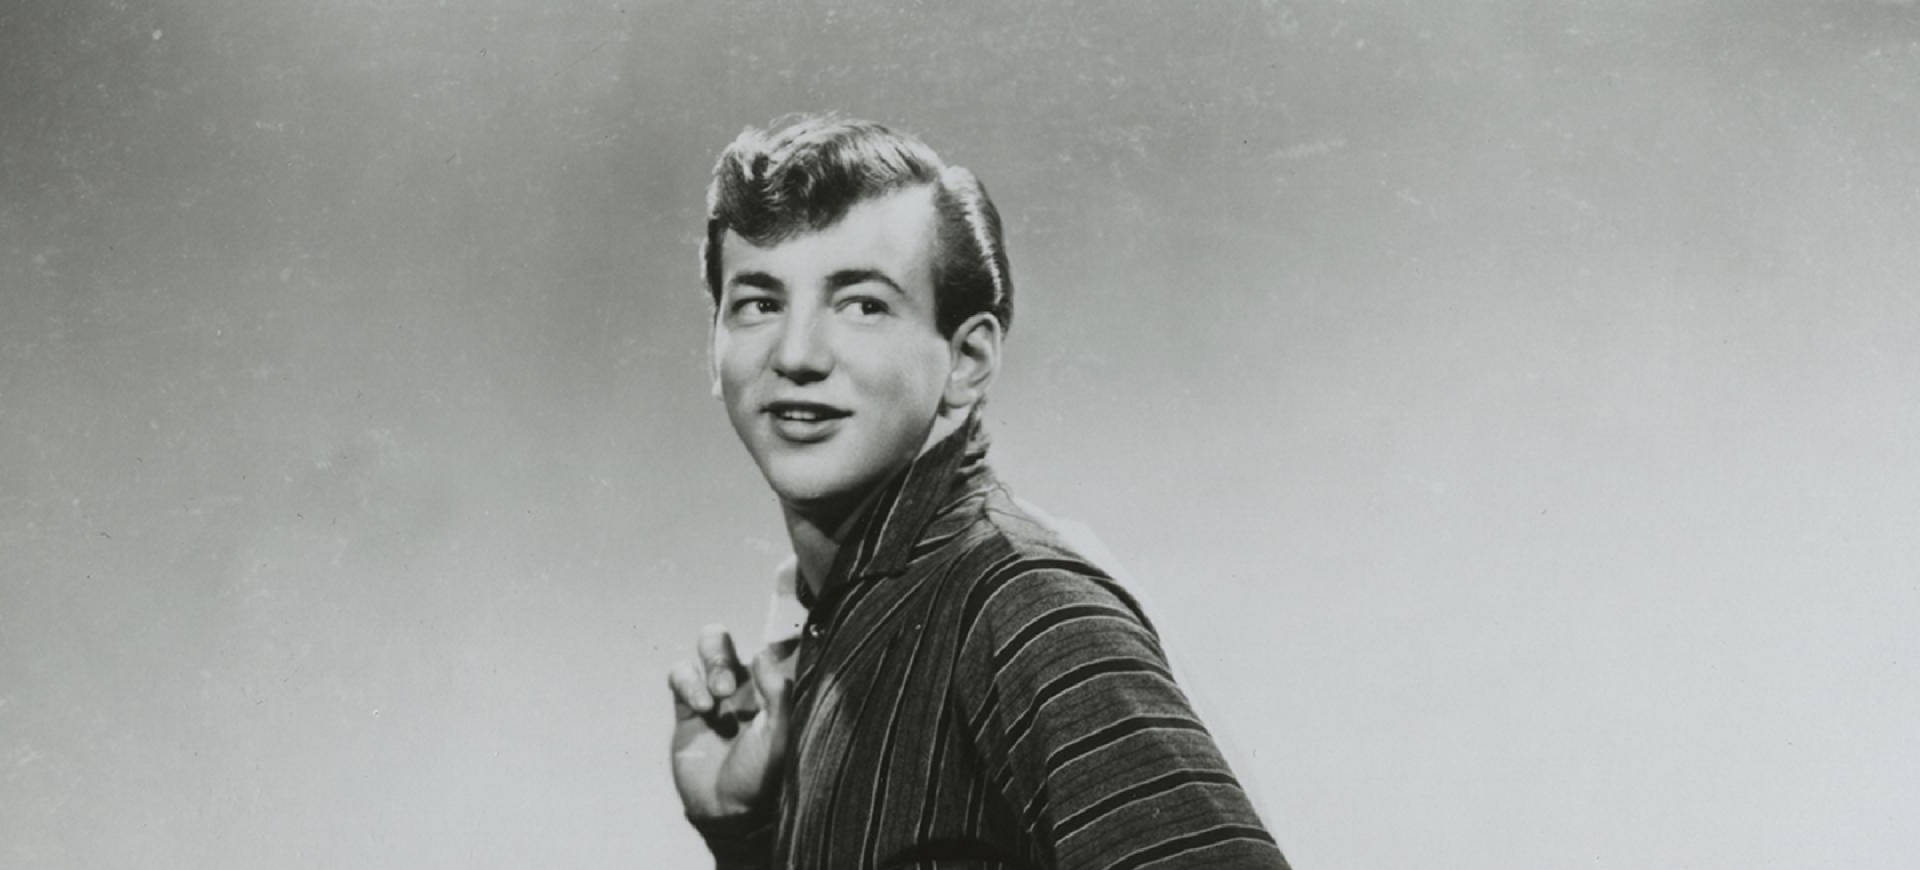 American Singer Bobby Darin 1950s Portrait Picture